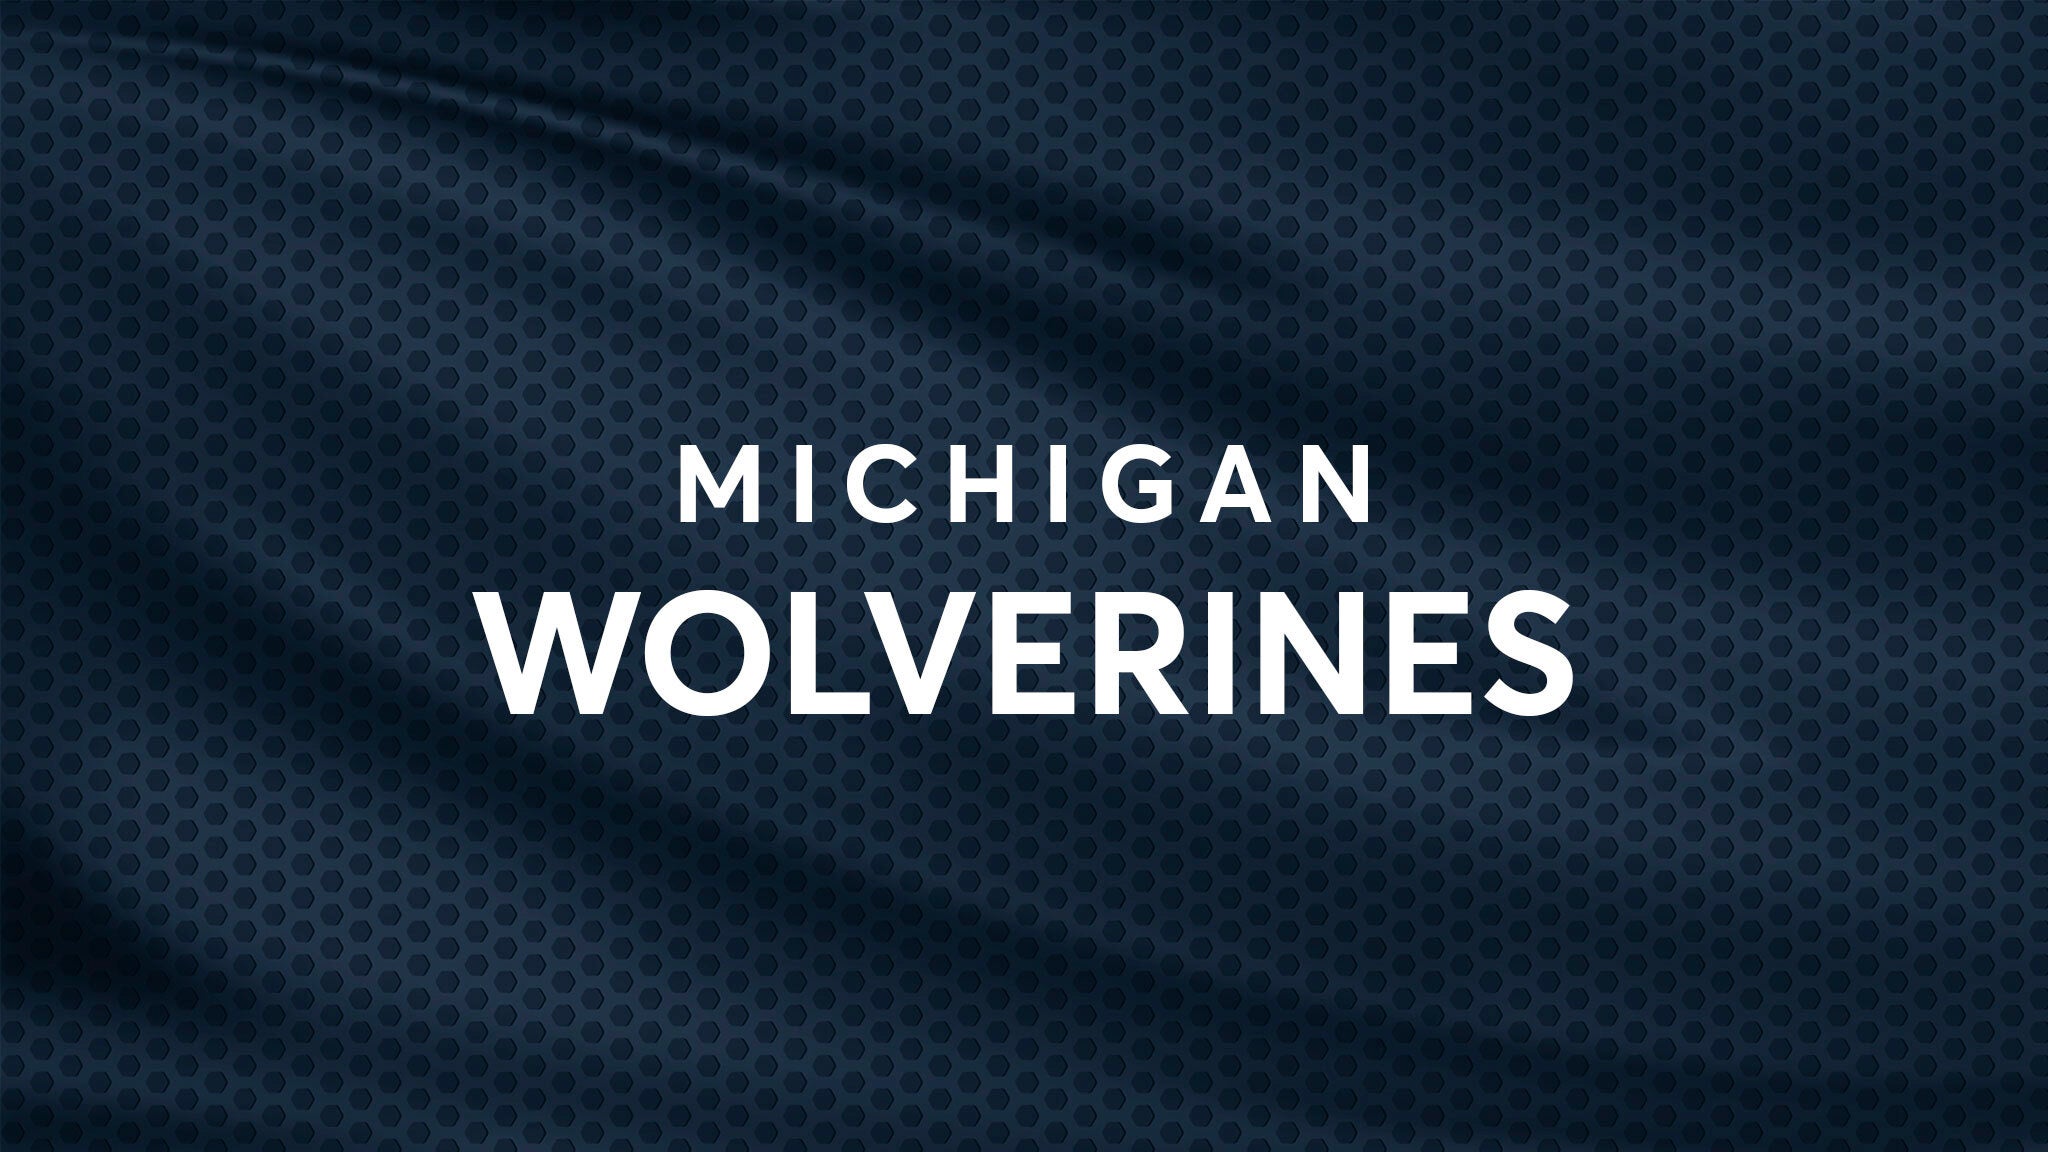 Michigan Wolverines Football vs. Oregon Ducks Football